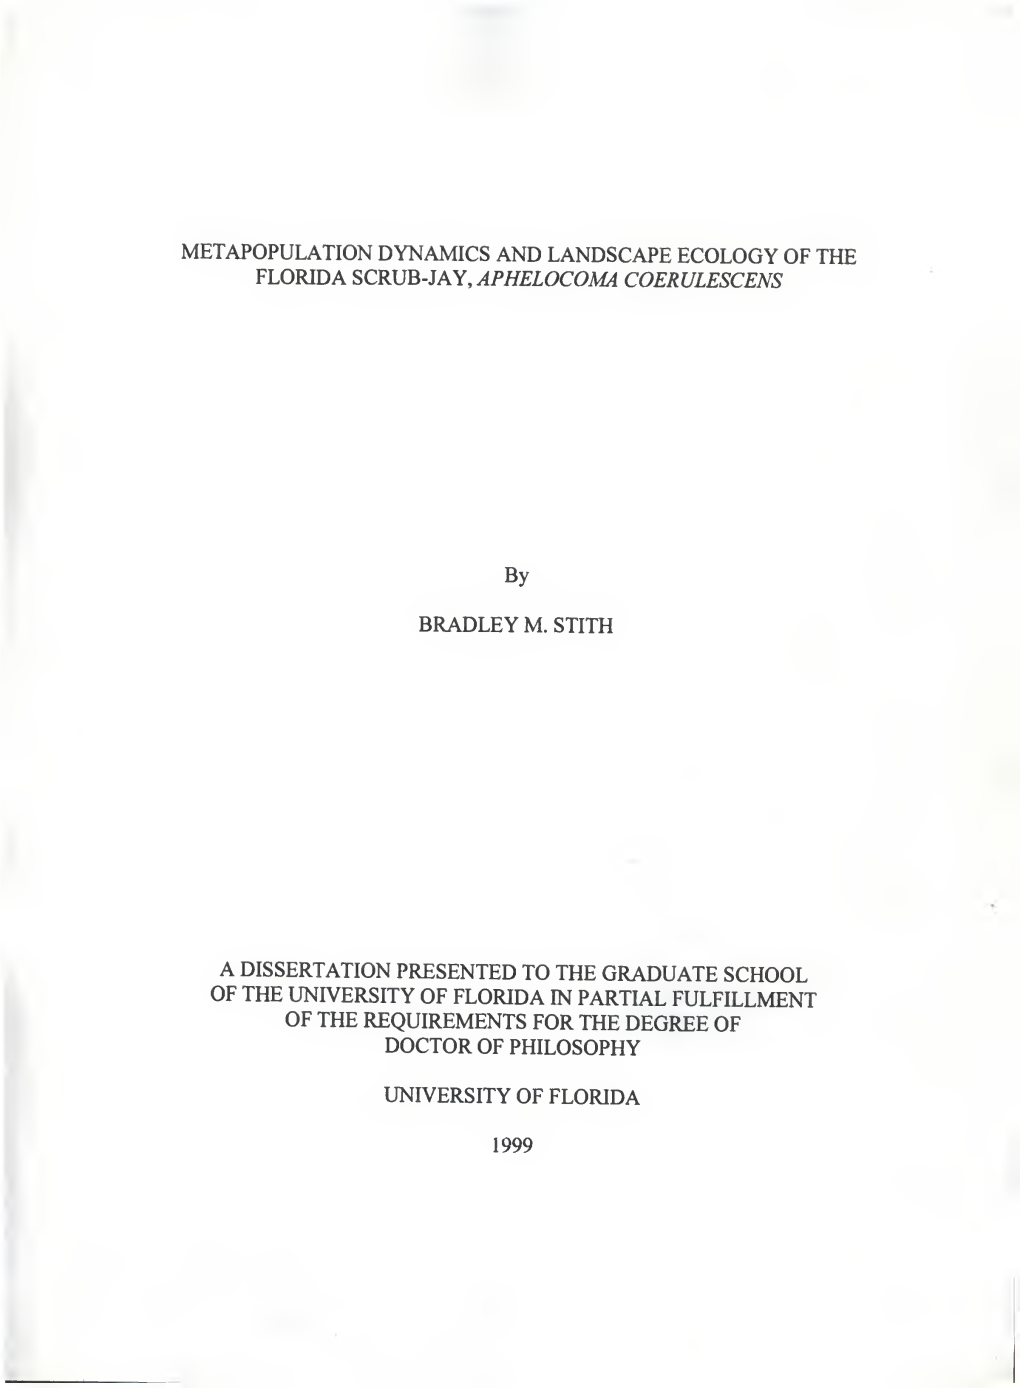 Metapopulation Dynamics and Landscape Ecology of the Florida Scrub-Jay, Aphelocoma Coerulescens